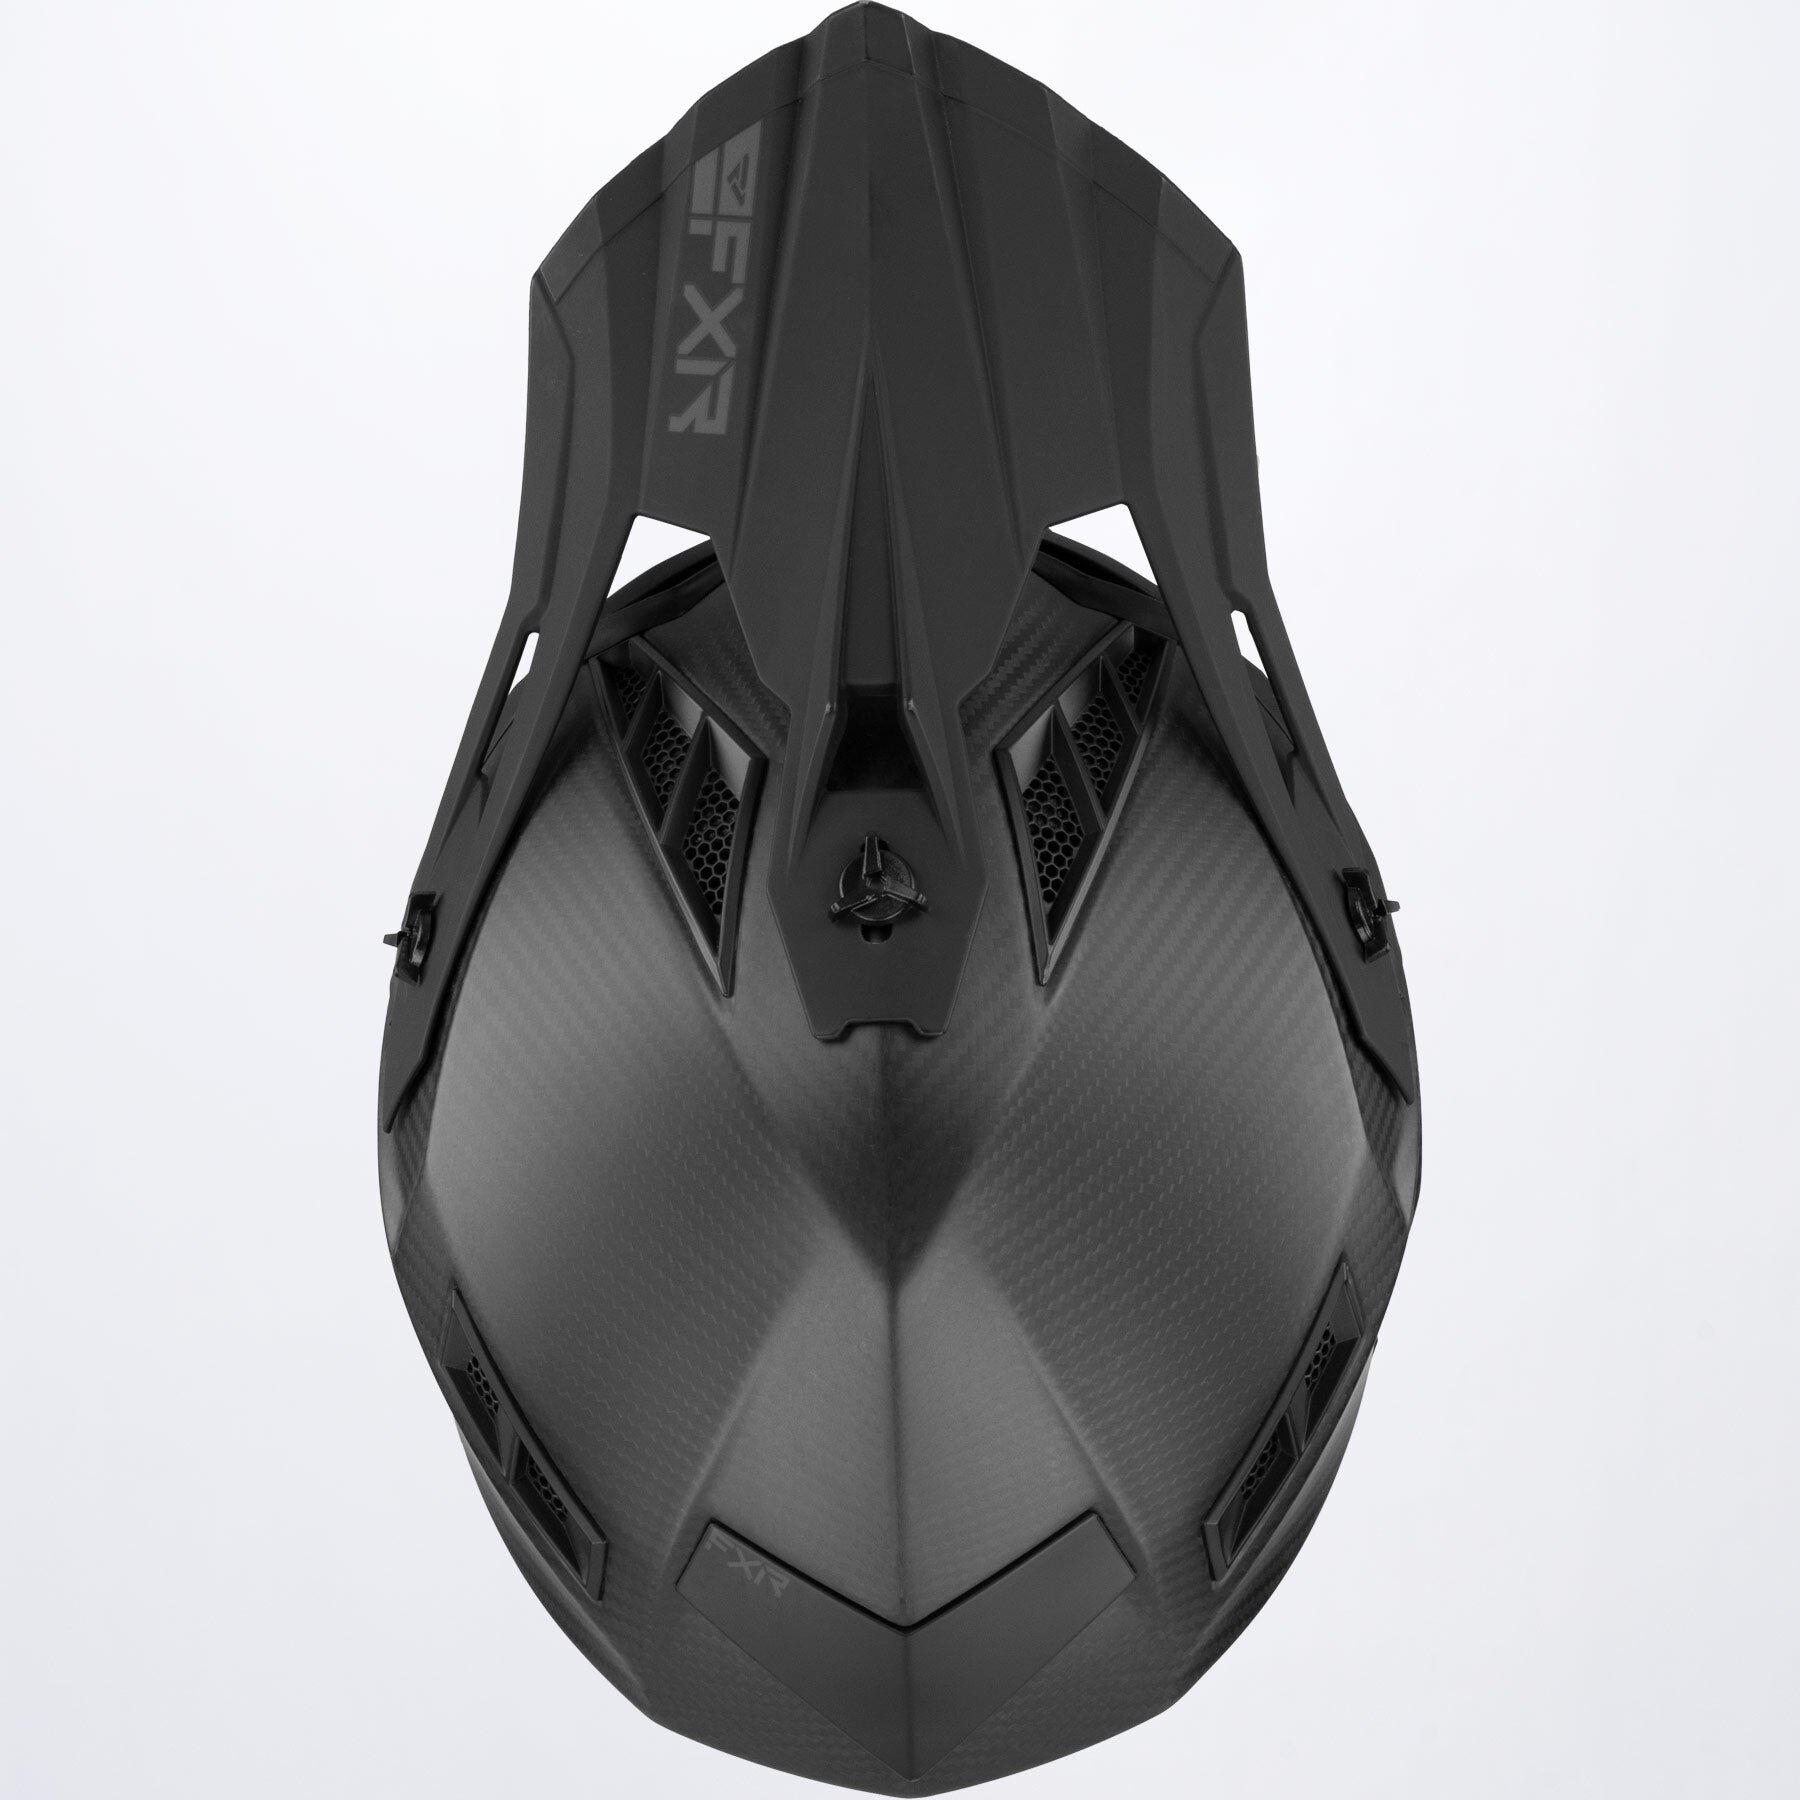 Helium Carbon Helmet with D Ring XS Black